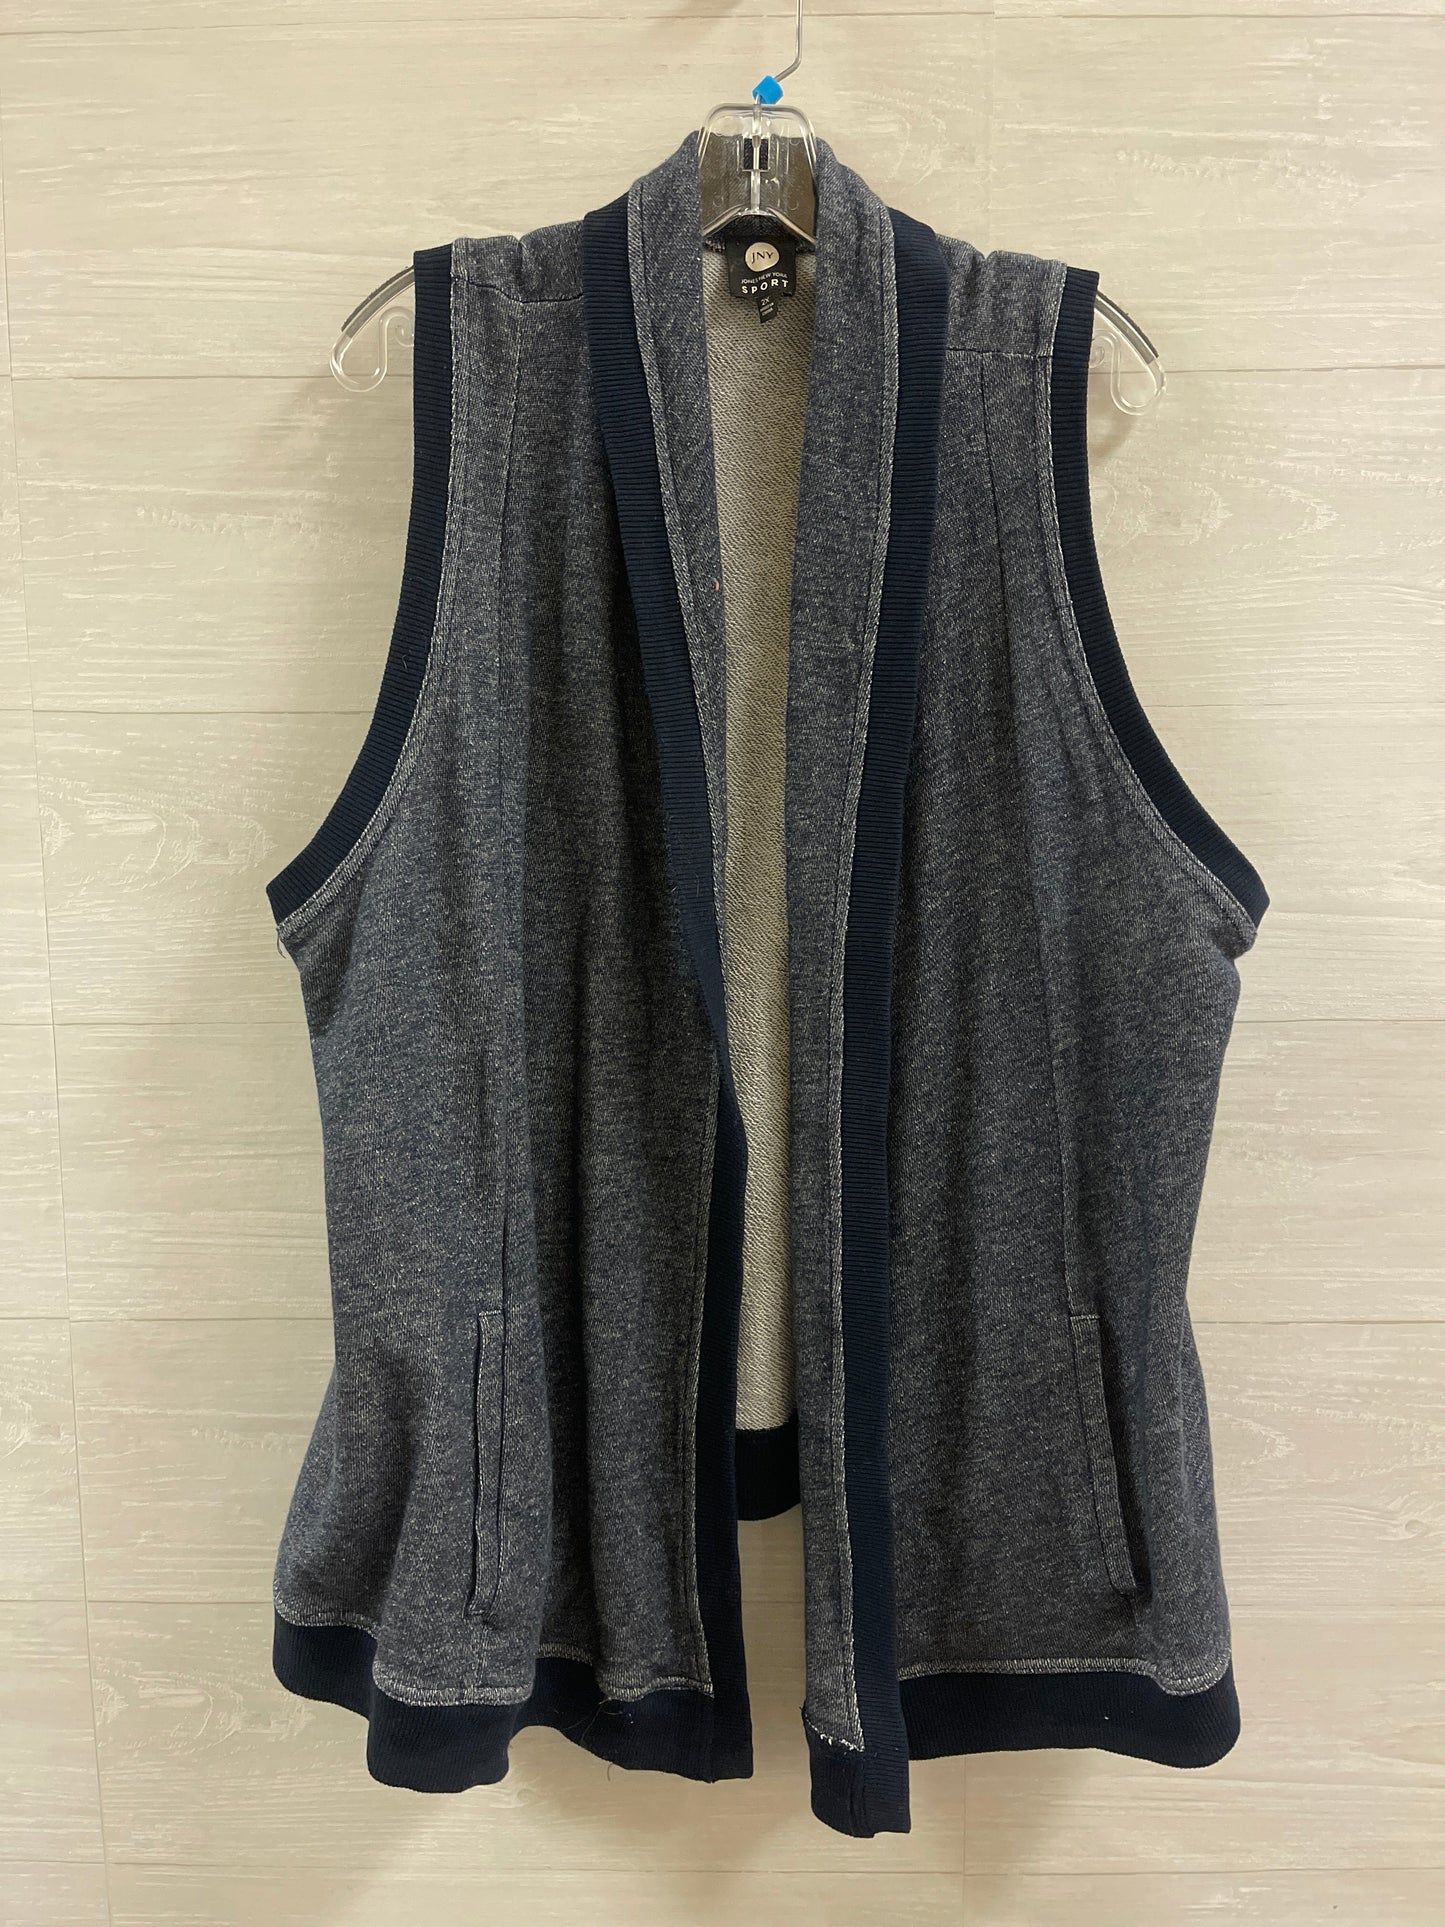 Vest Sweater By Jones New York  Size: 2x